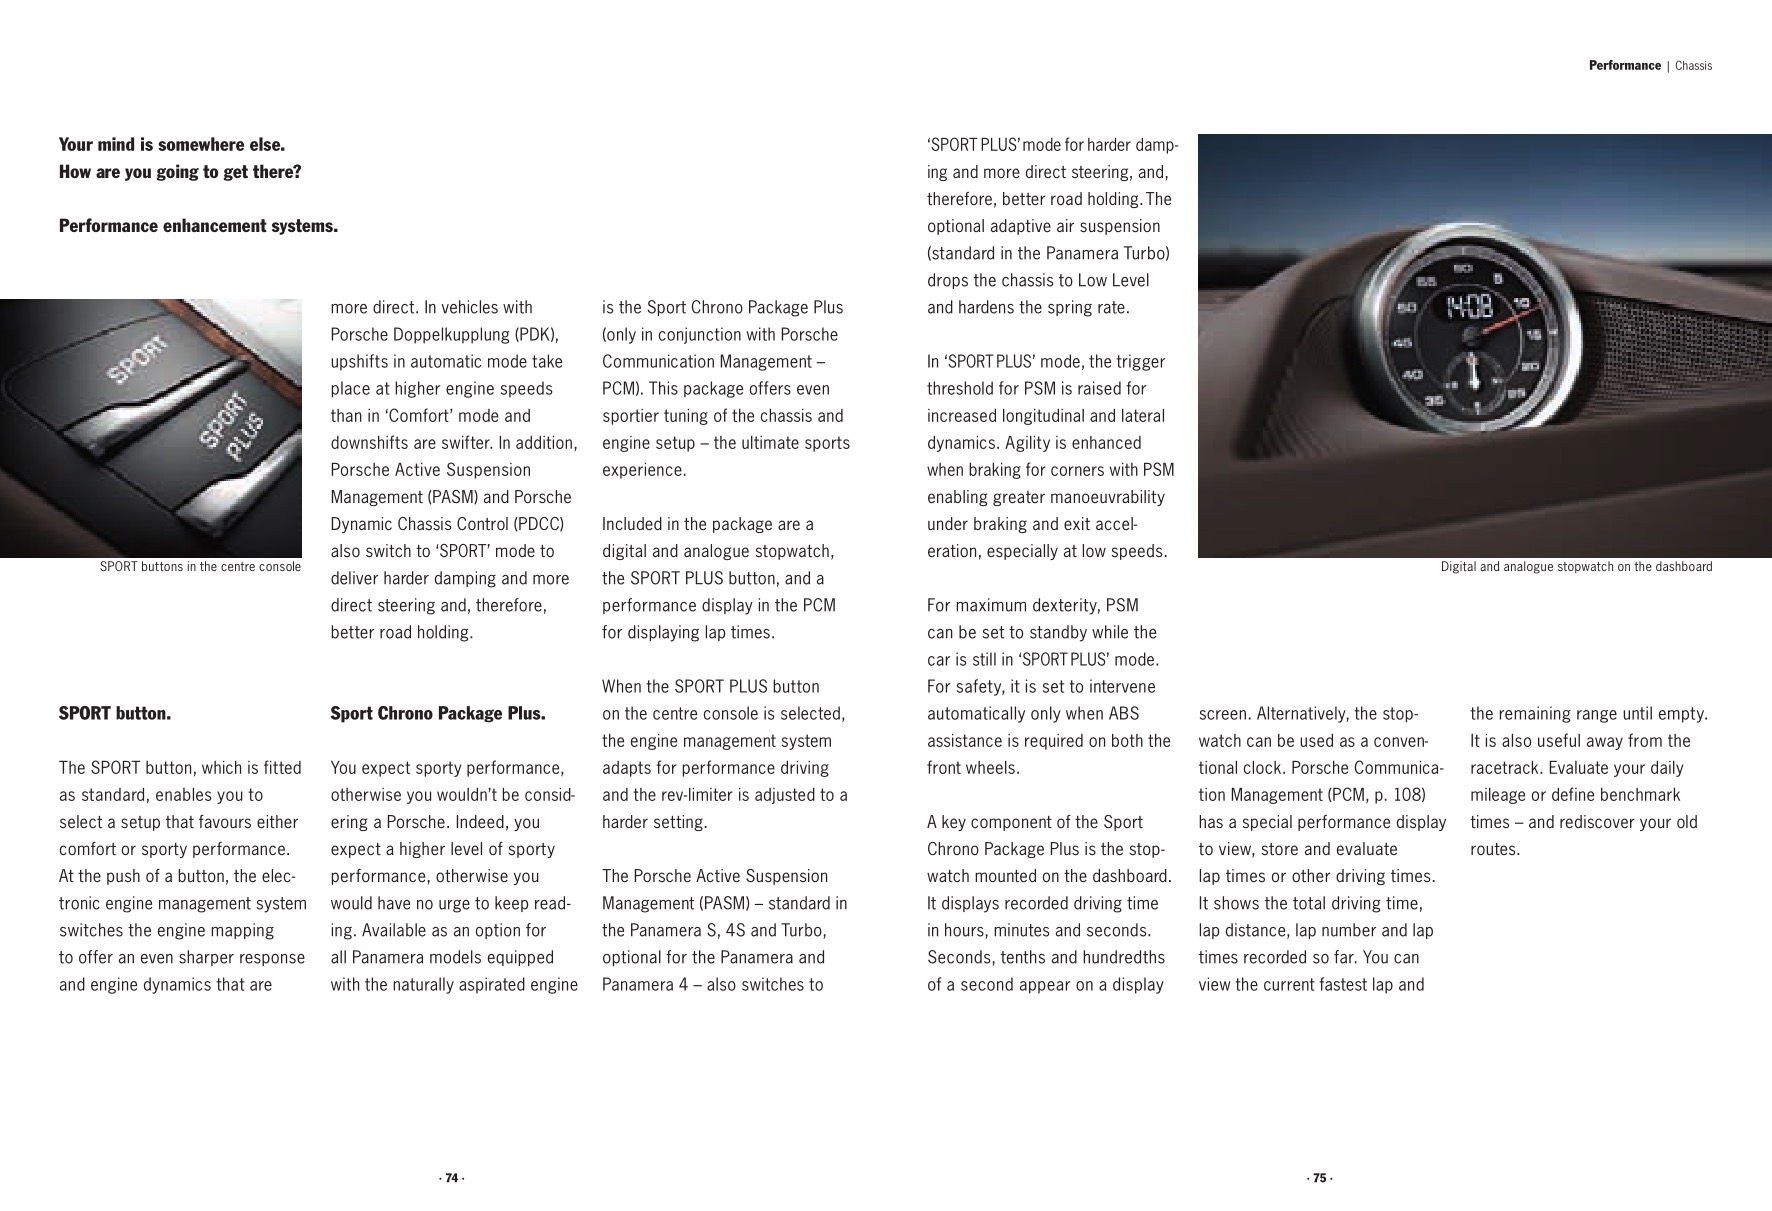 2010 Porsche Panamera Brochure Page 38